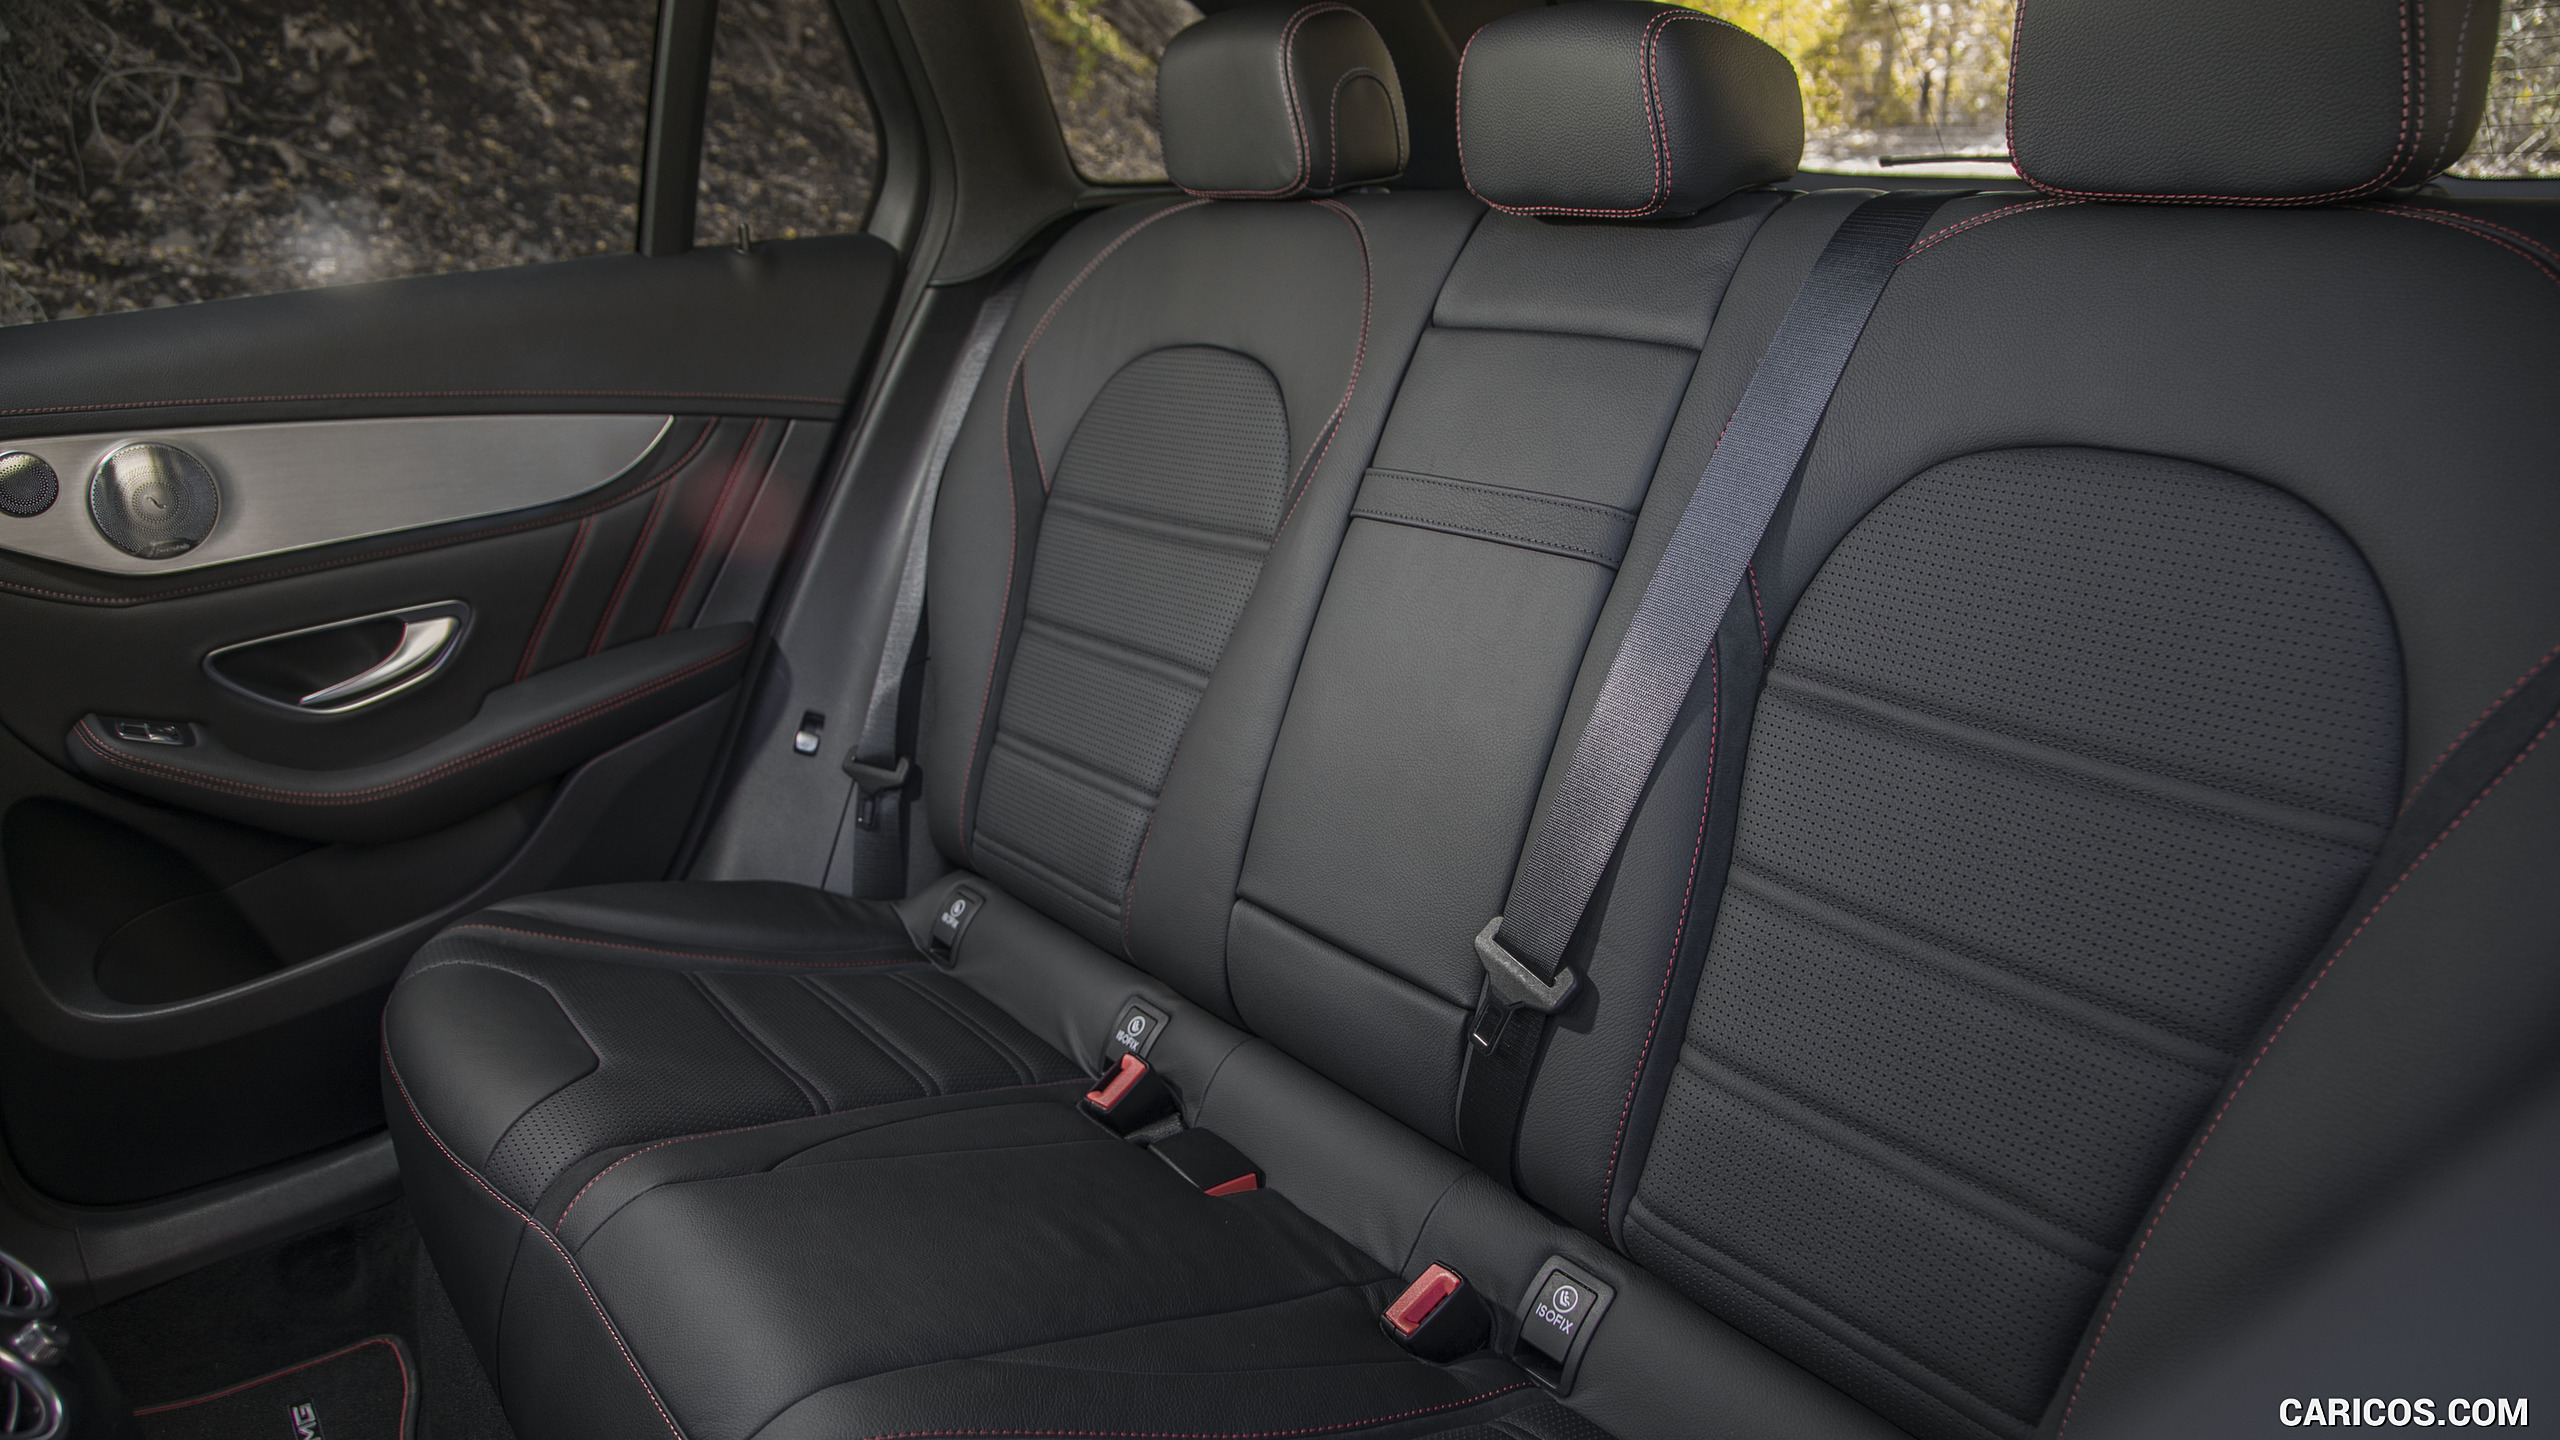 2017 Mercedes-AMG GLC 43 (US-Spec) - Interior, Rear Seats, #108 of 108